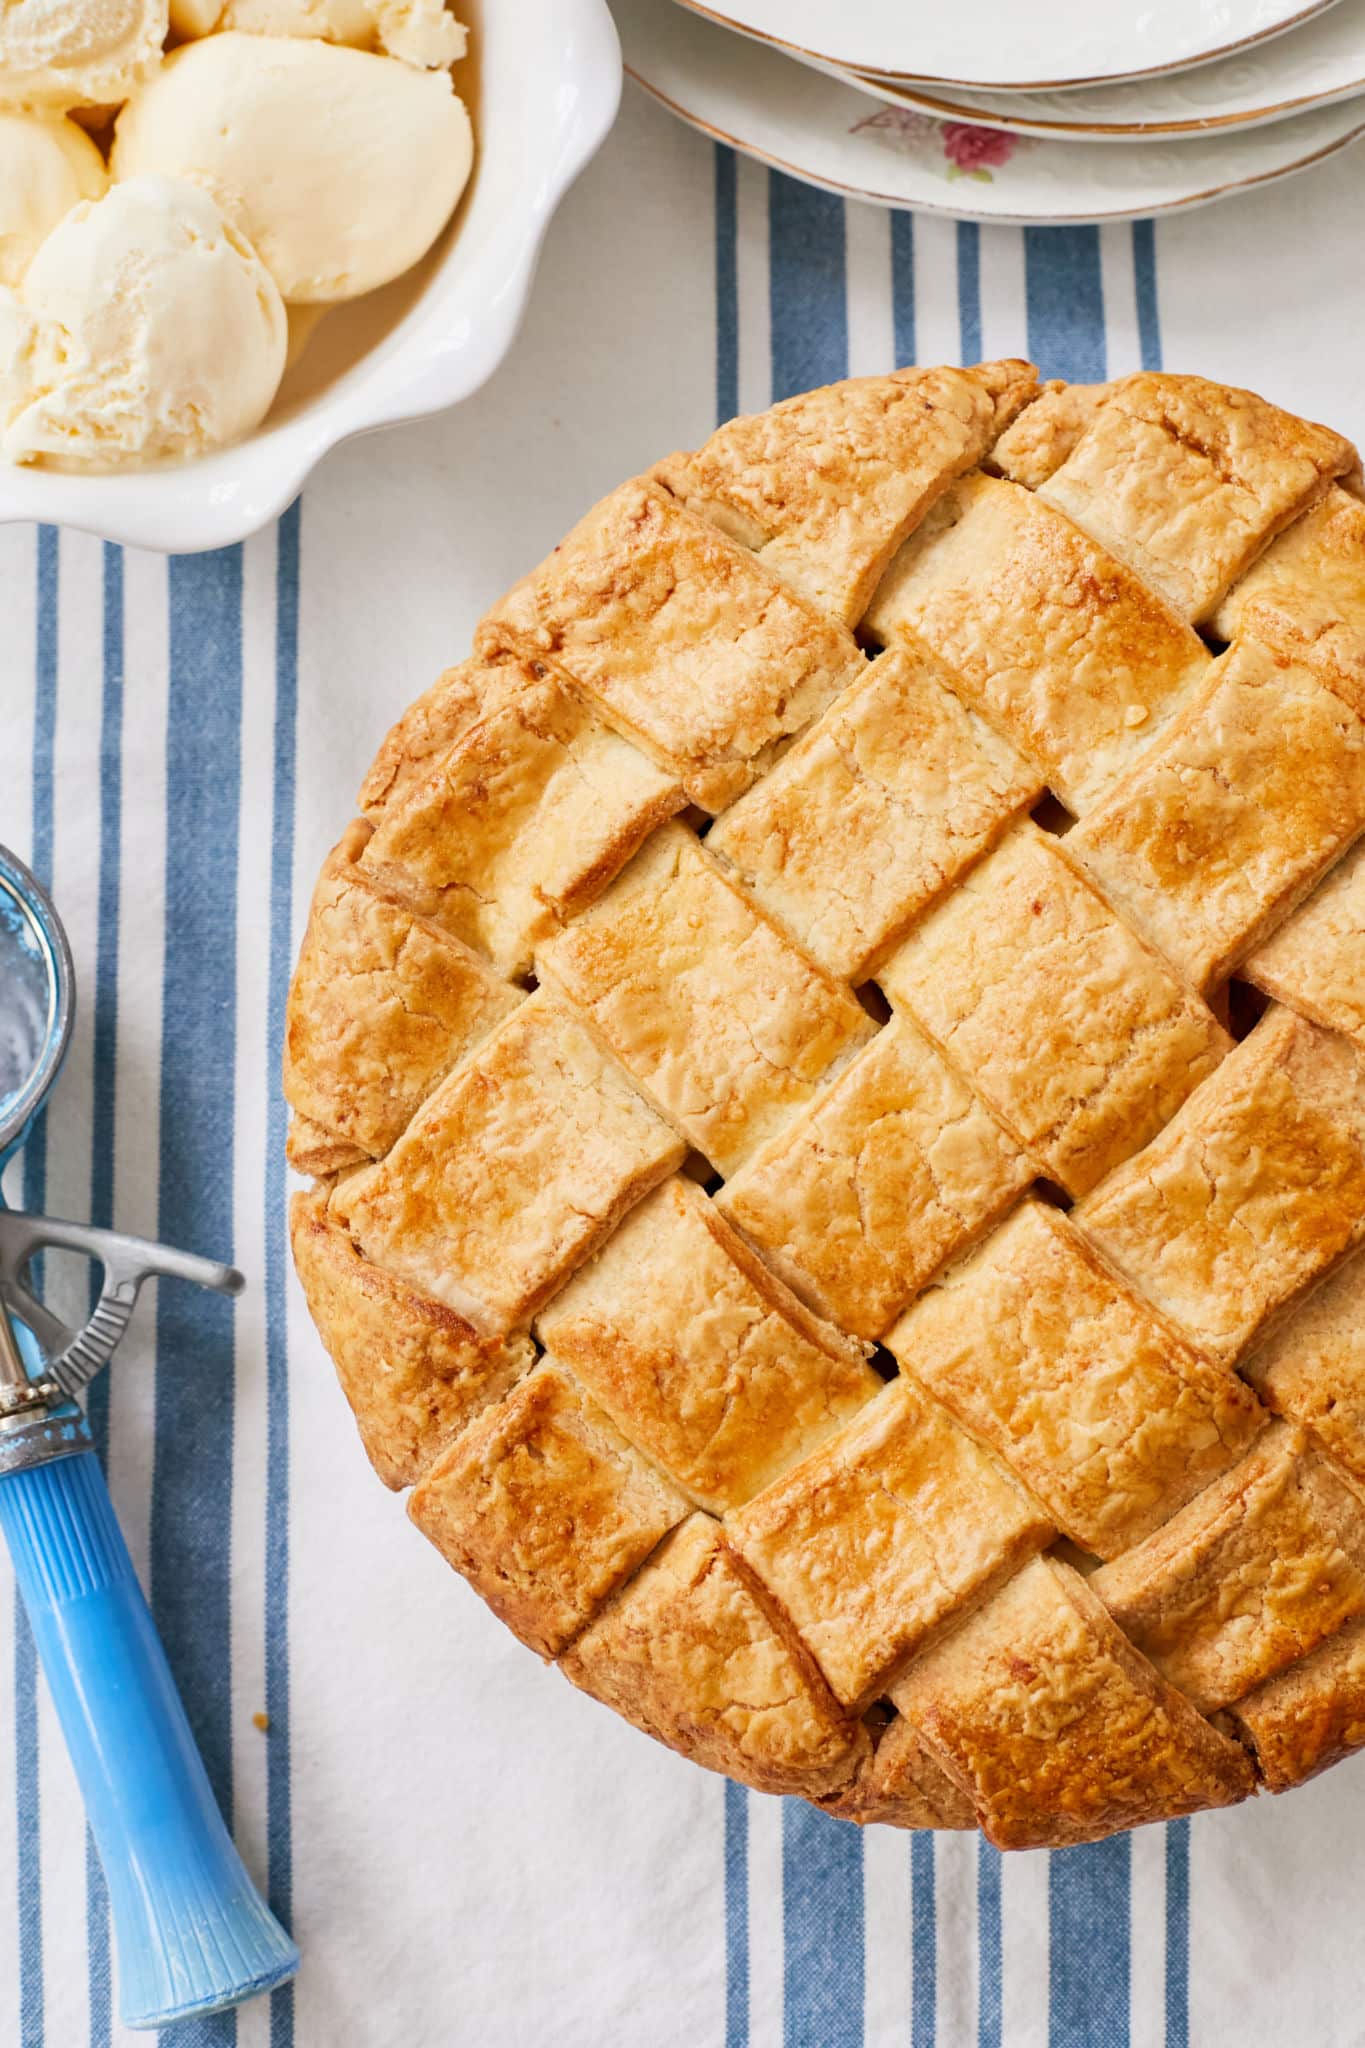 A caramel apple pie decorated with a wide lattice top.